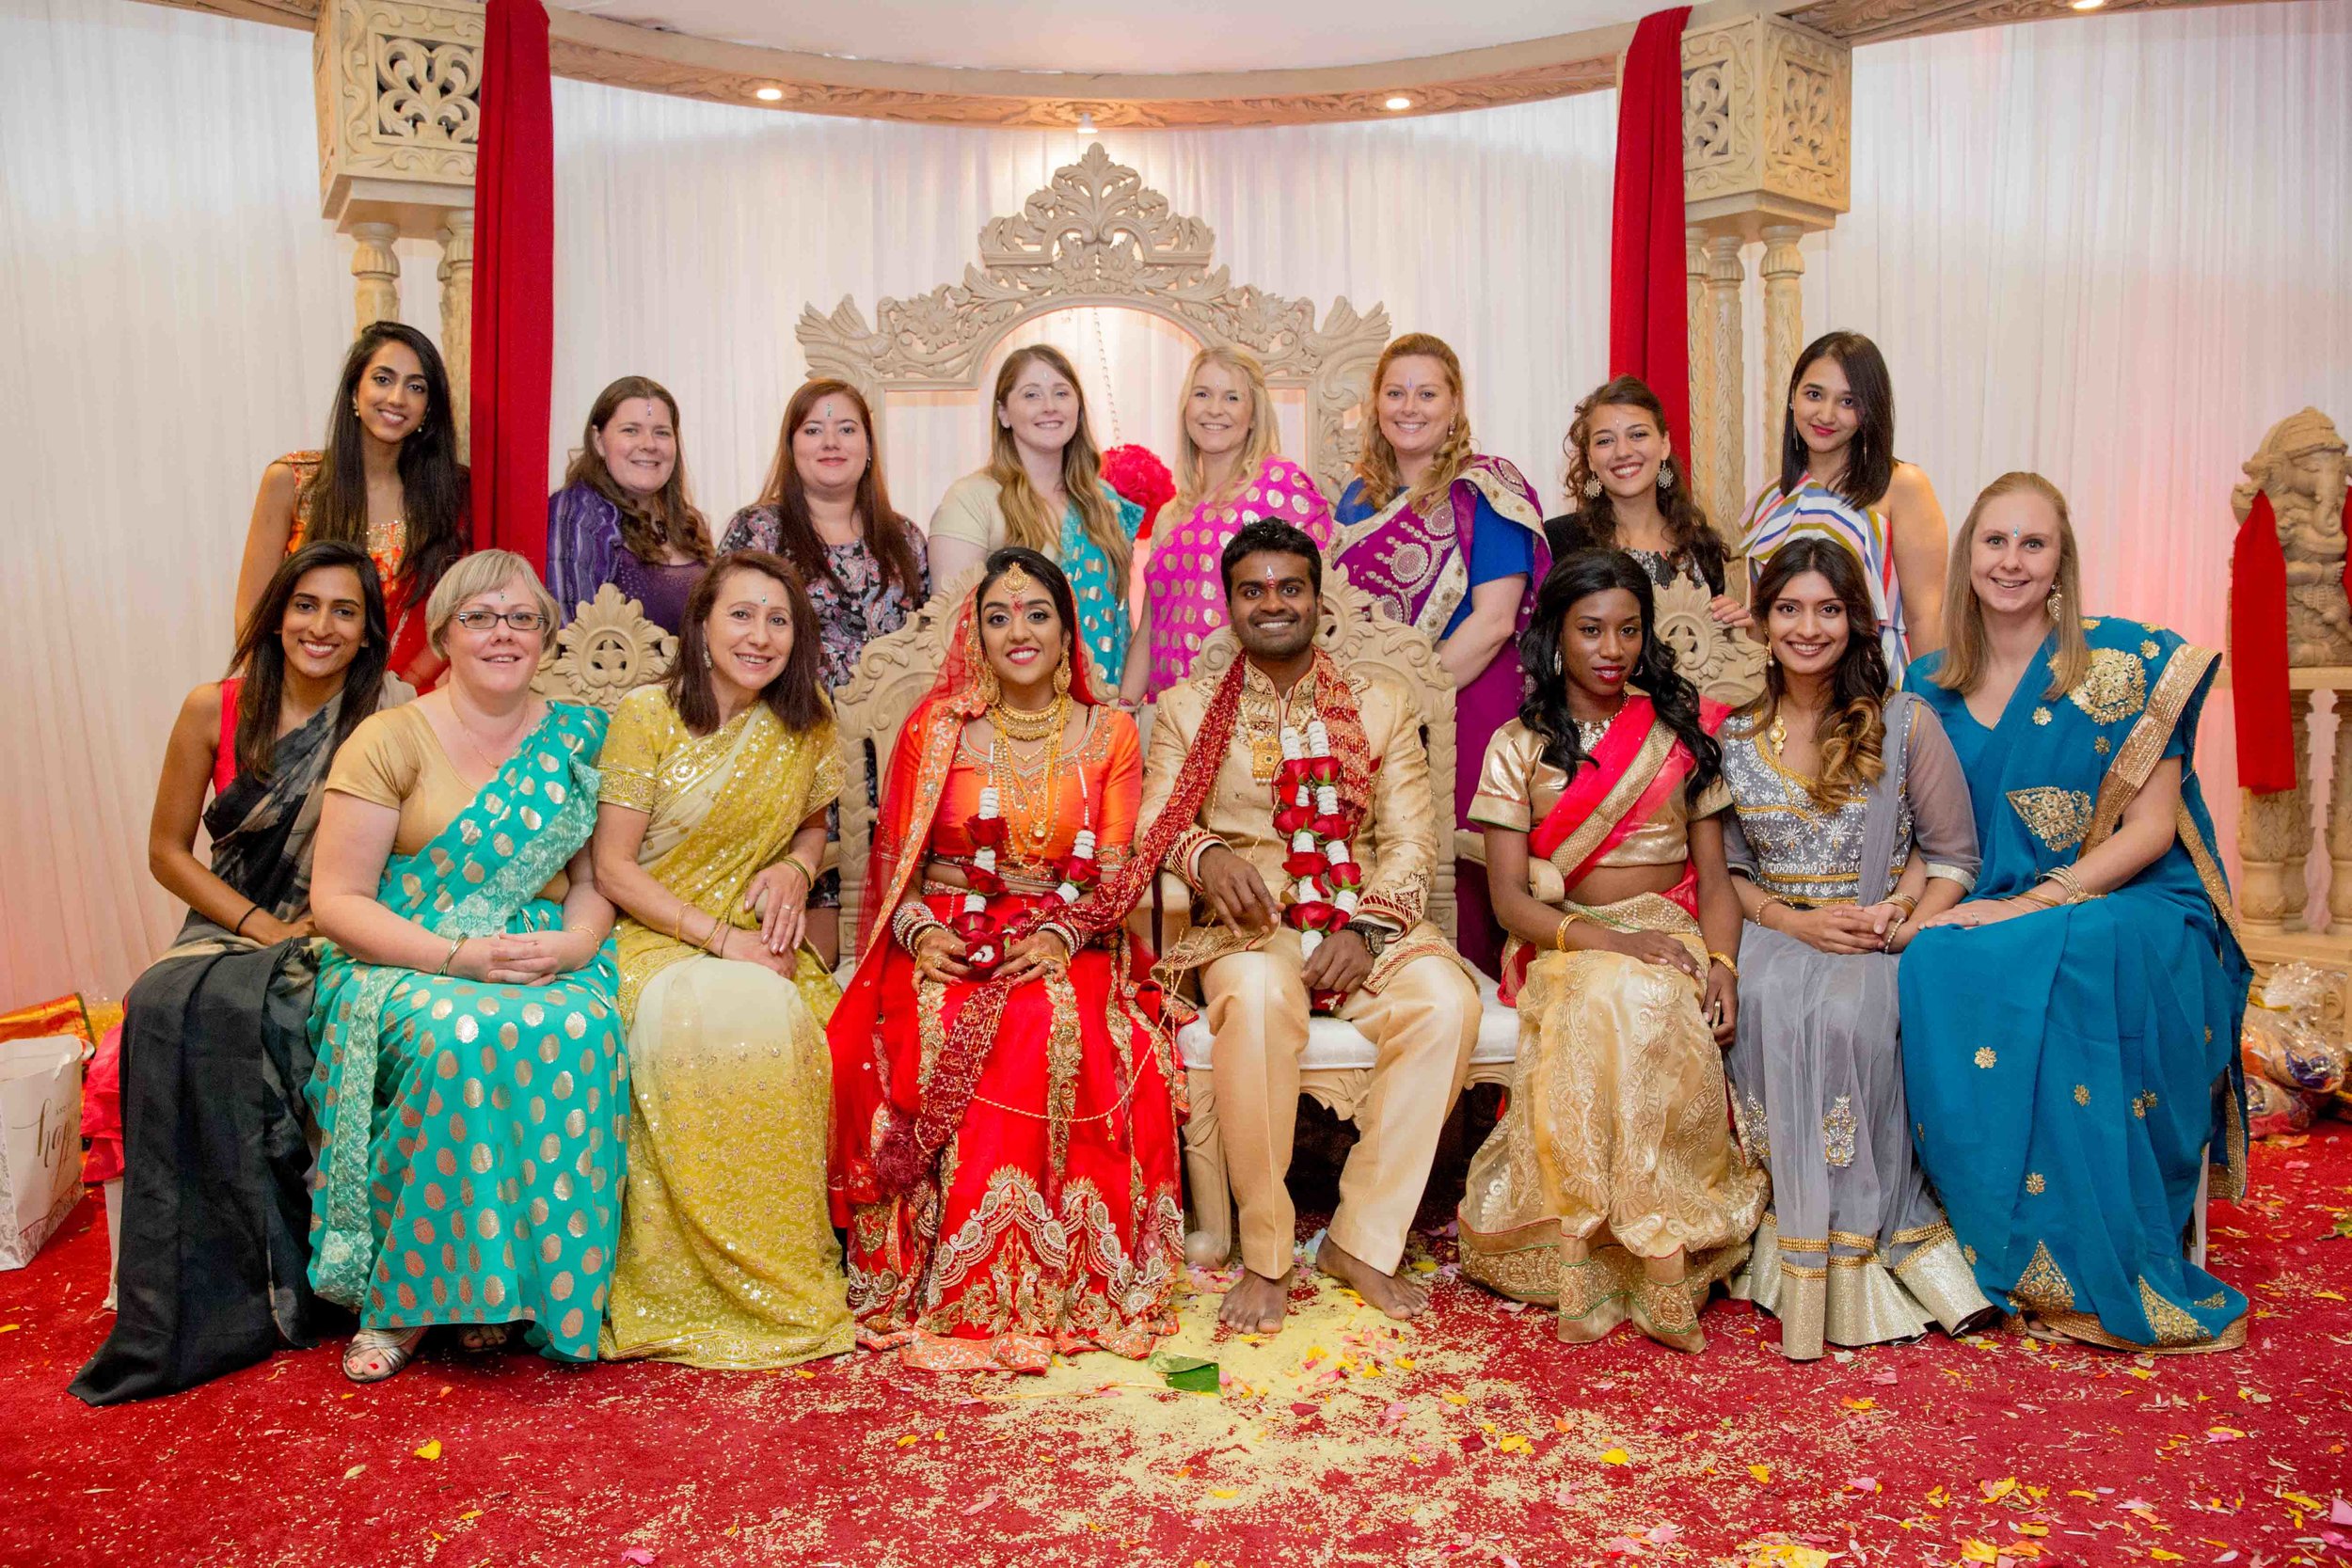 premier-banquetting-london-Hindu-asian-wedding-photographer-natalia-smith-photography-41.jpg